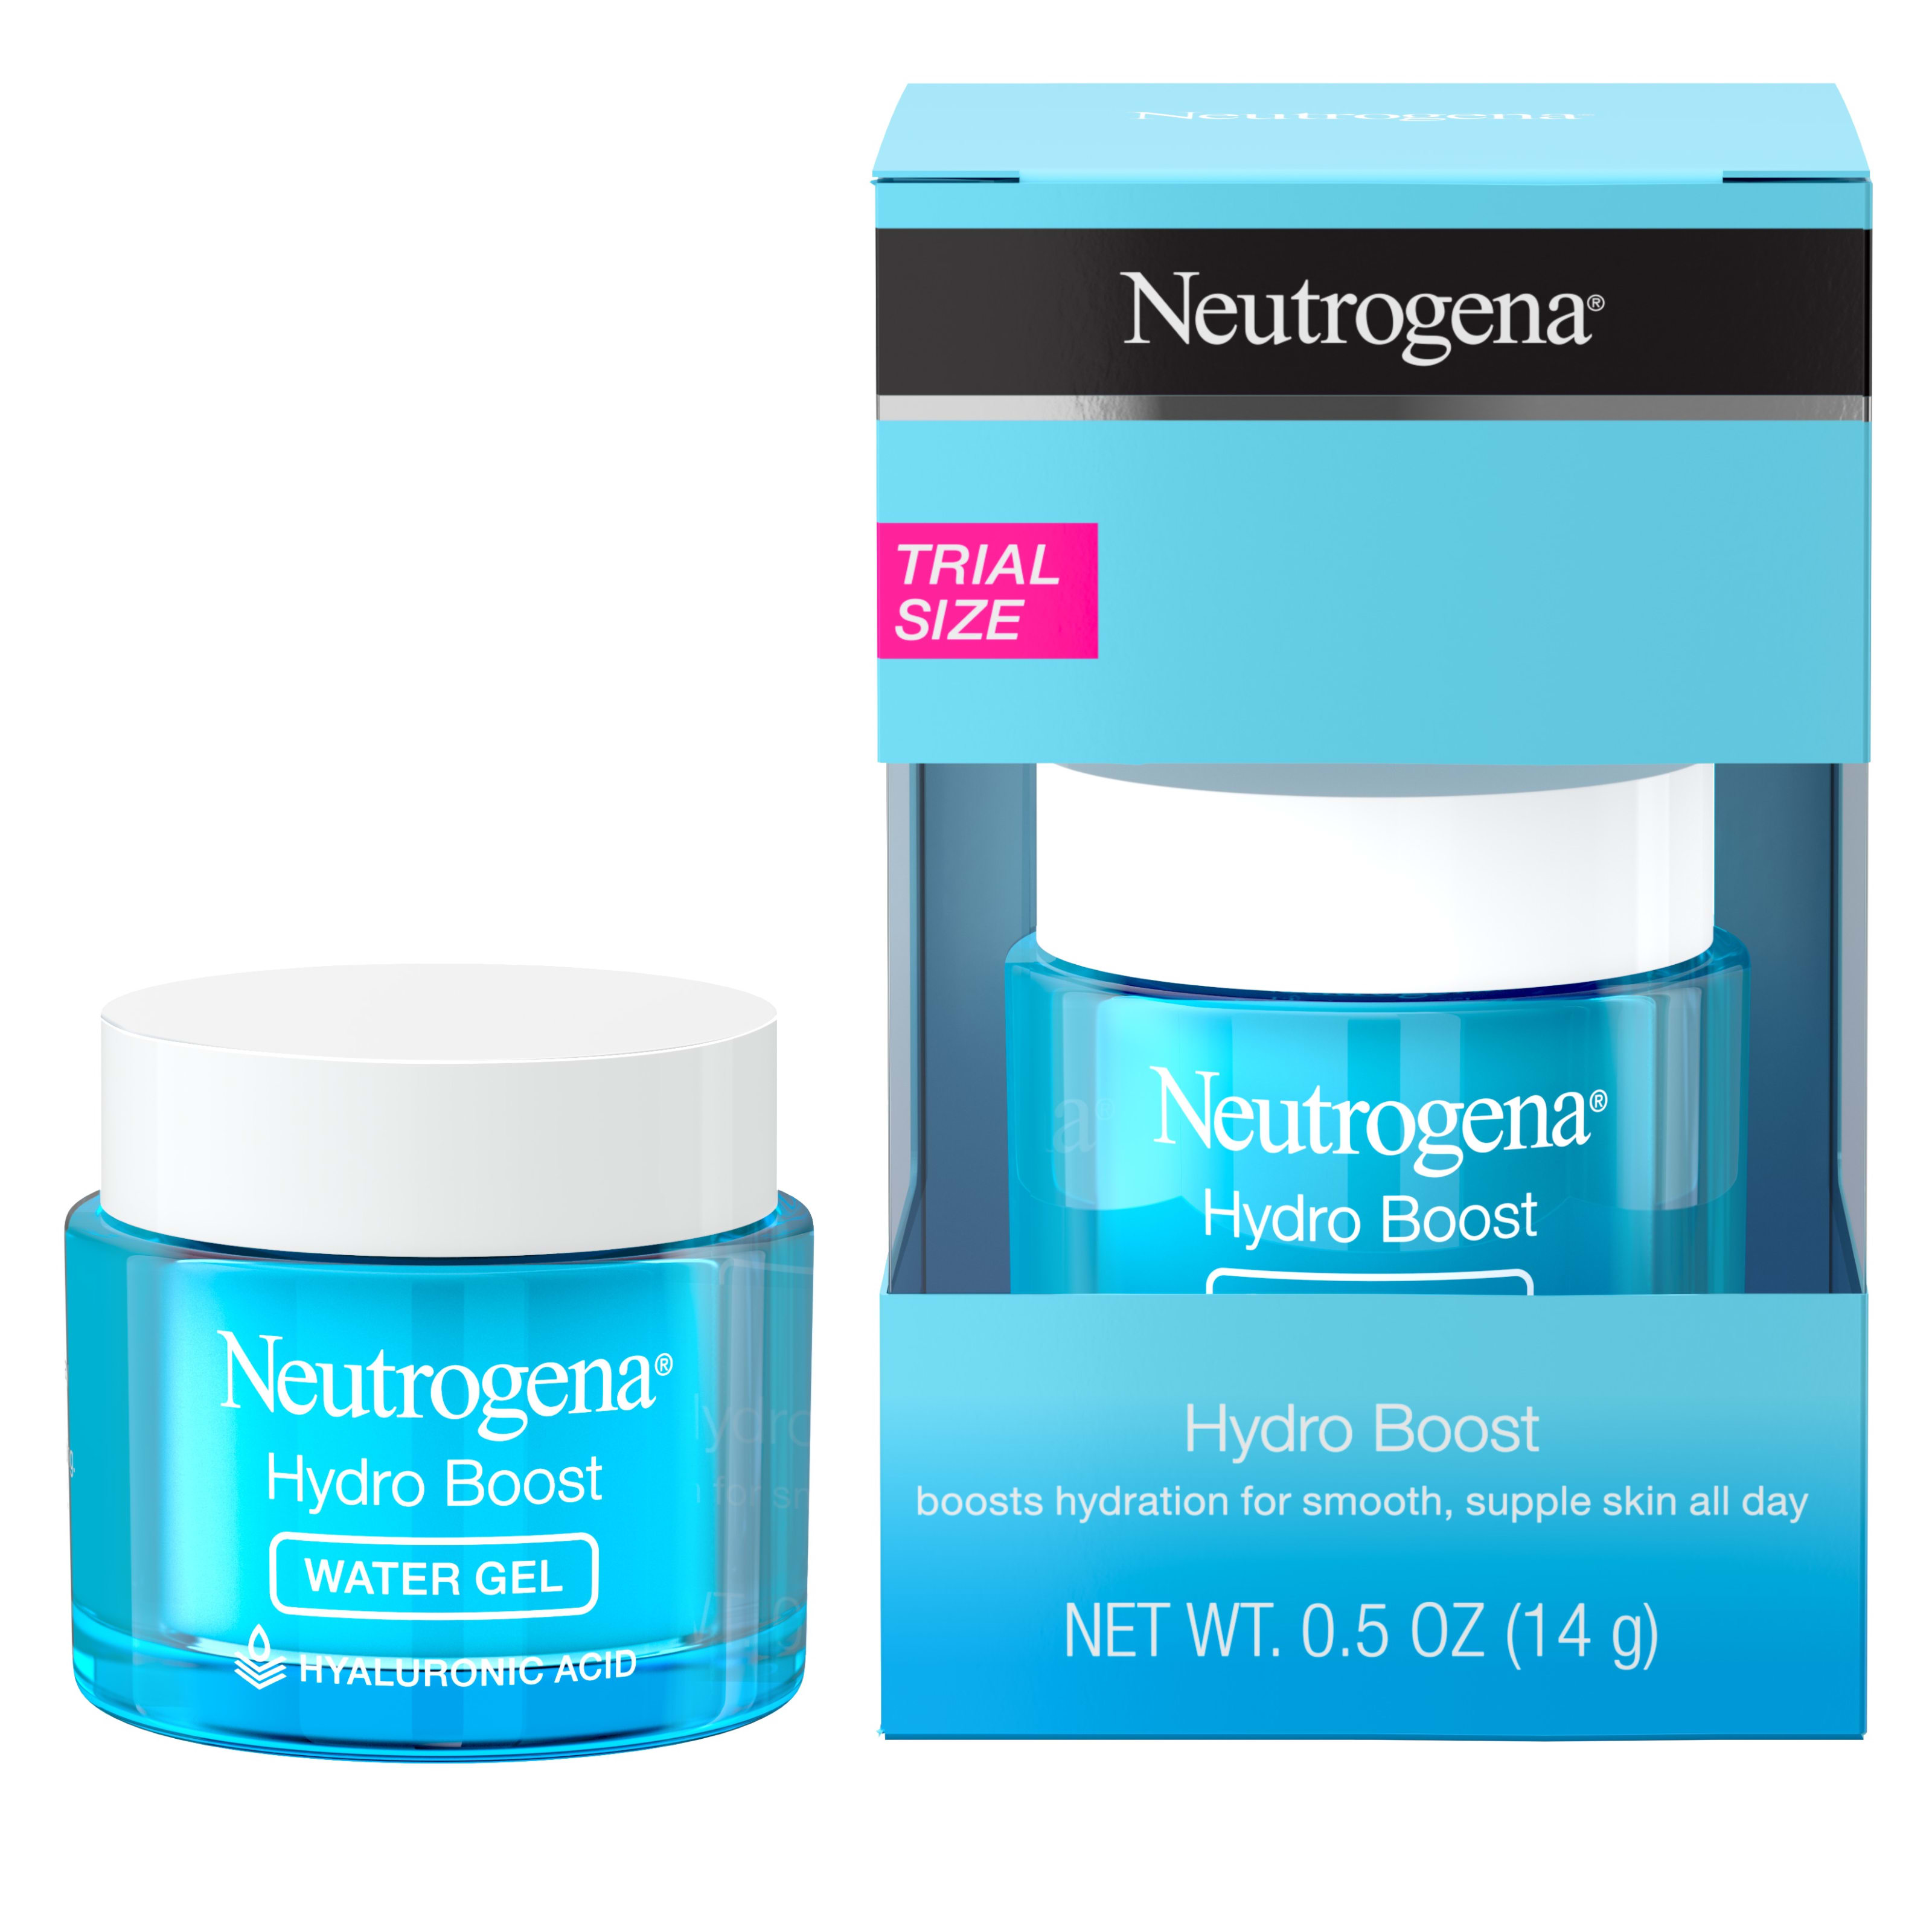 Neutrogena Hydro Boost Hyaluronic Acid Face Moisturizer for Dry Skin, 0.5 oz - image 3 of 10